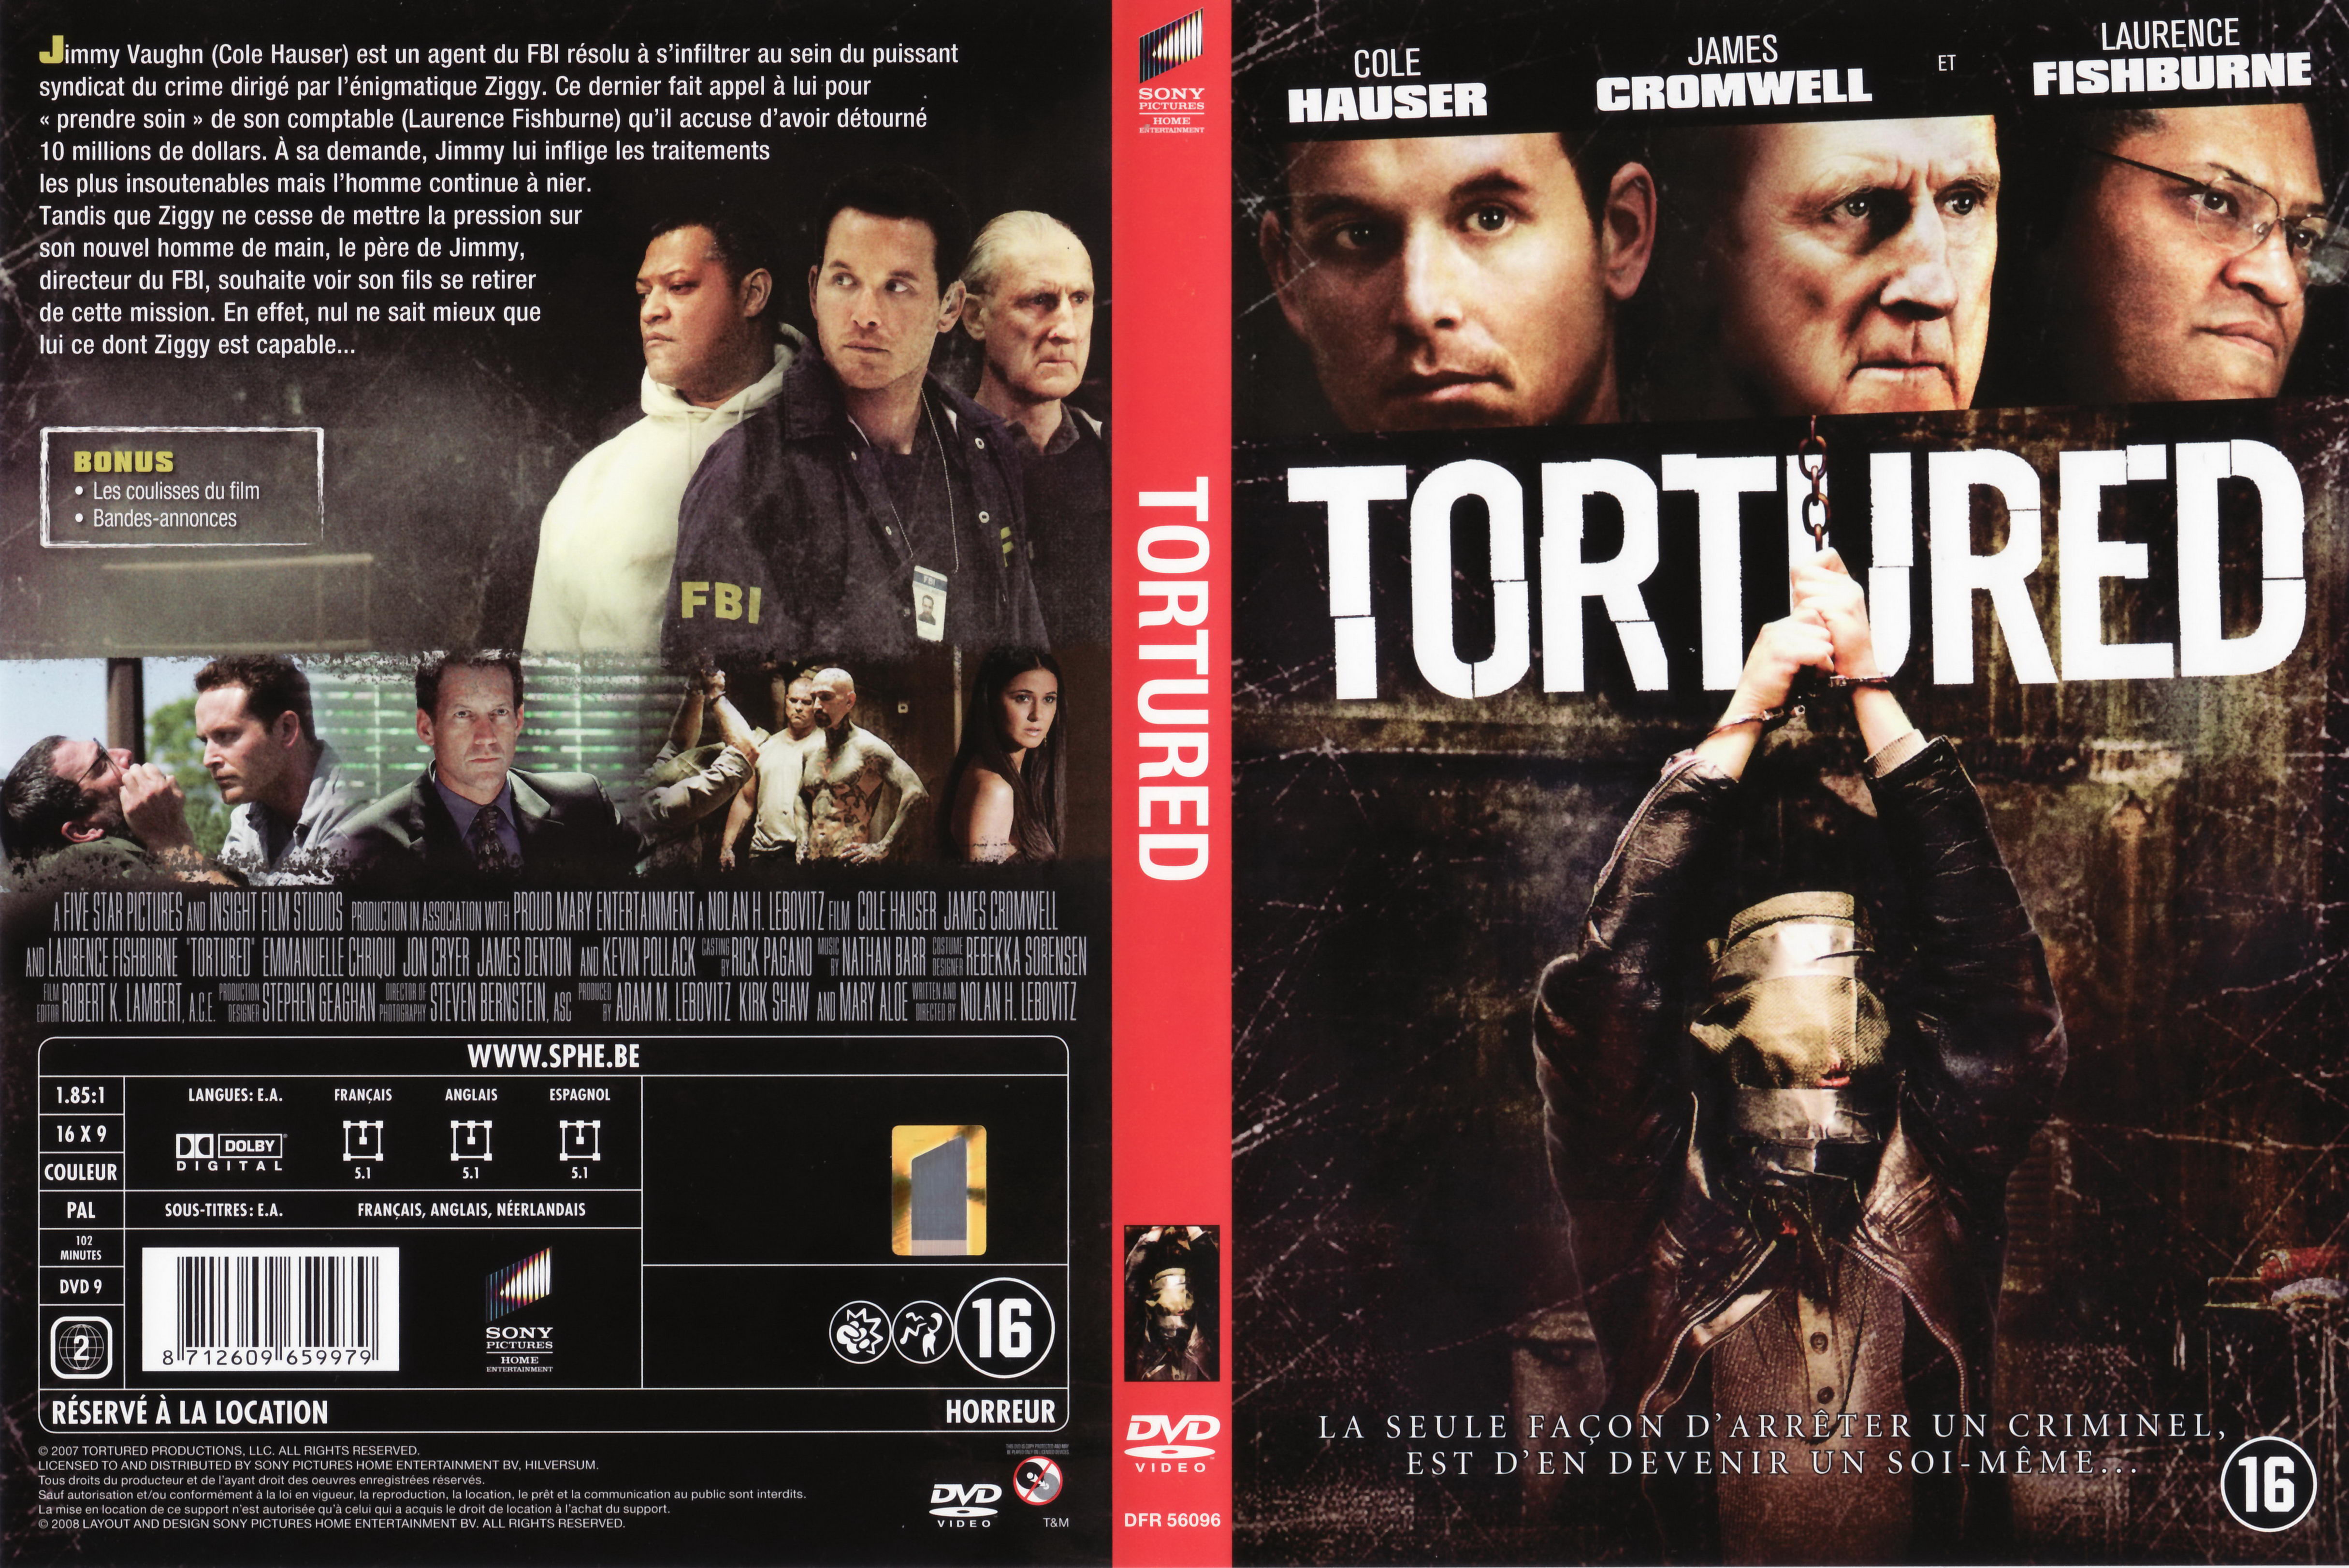 Jaquette DVD Tortured